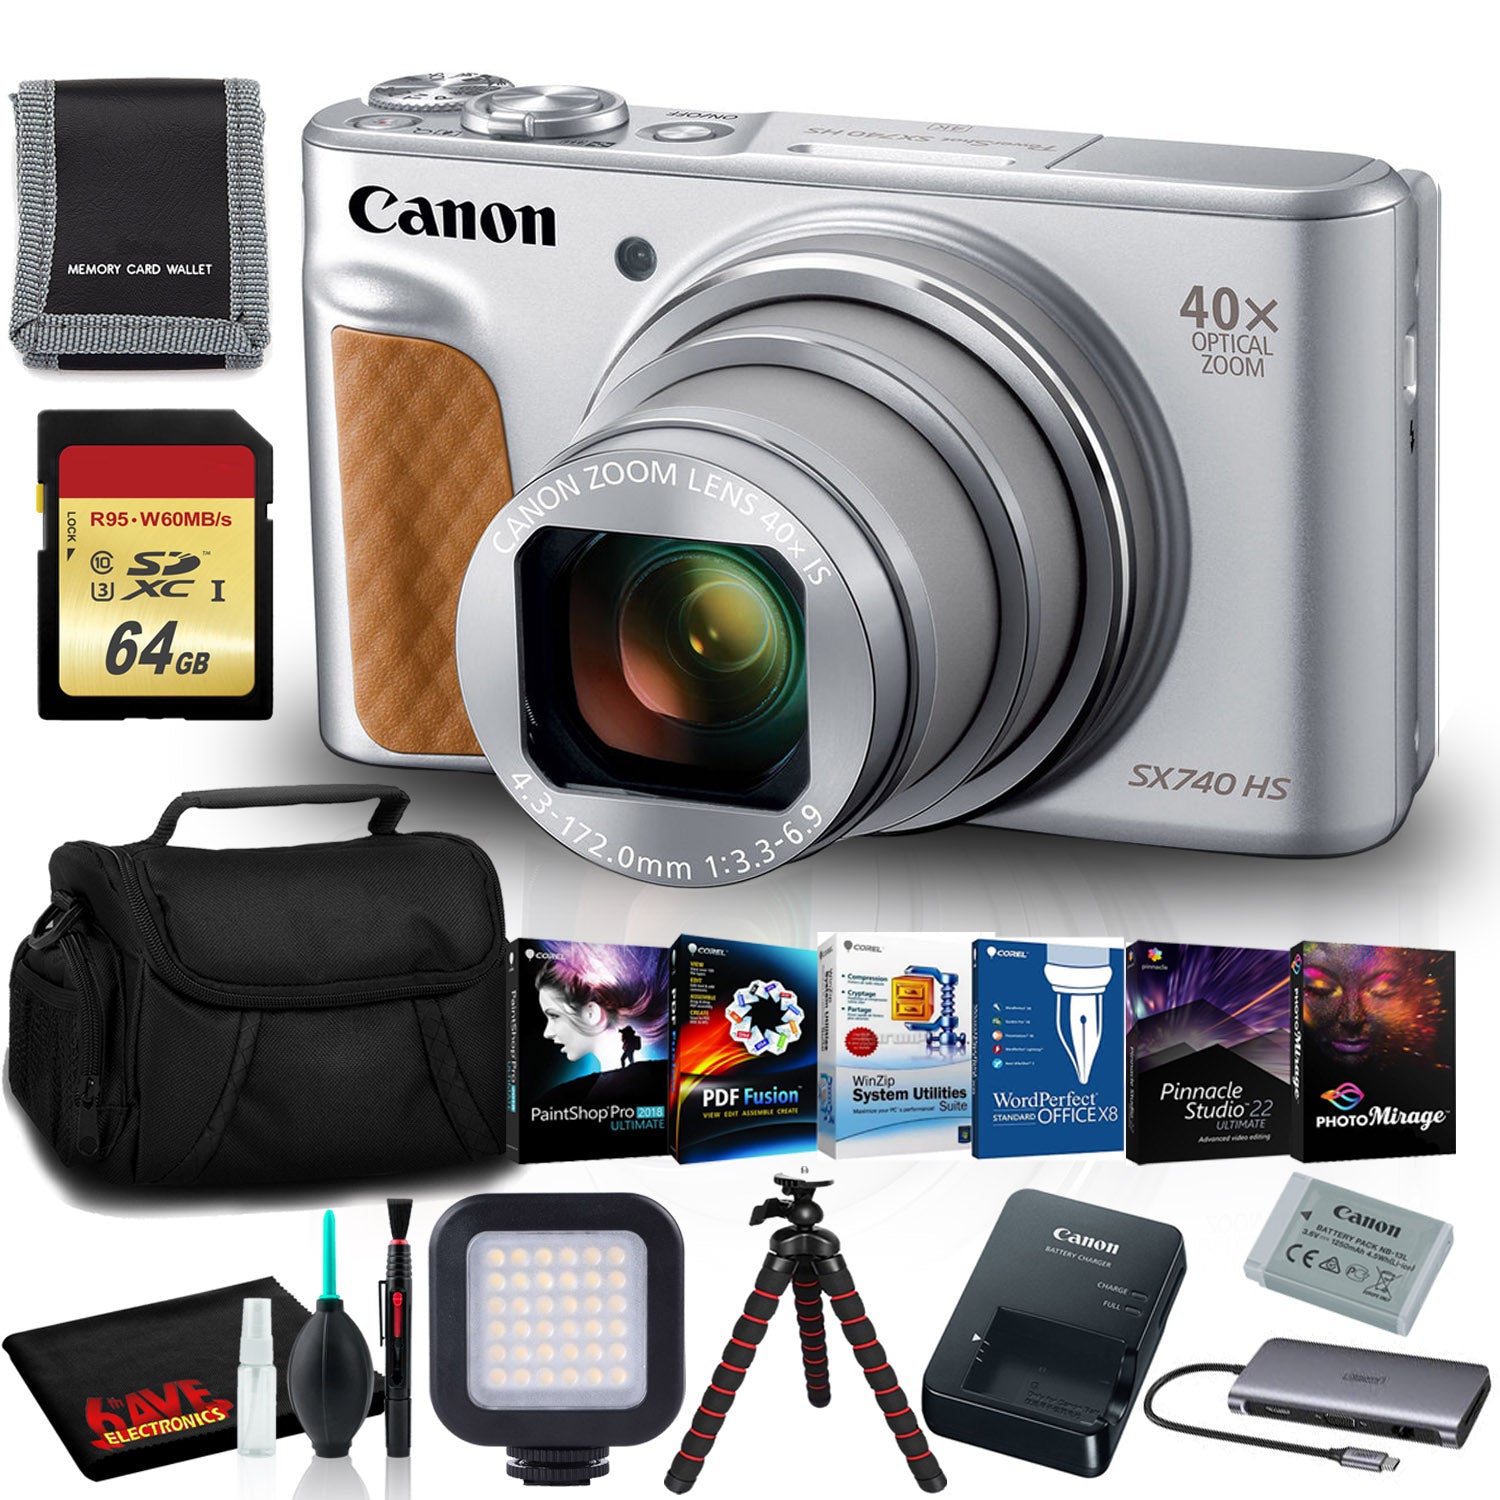 Canon PowerShot SX740 Digital Camera (Silver) with LED Light, Memory Card Bundle